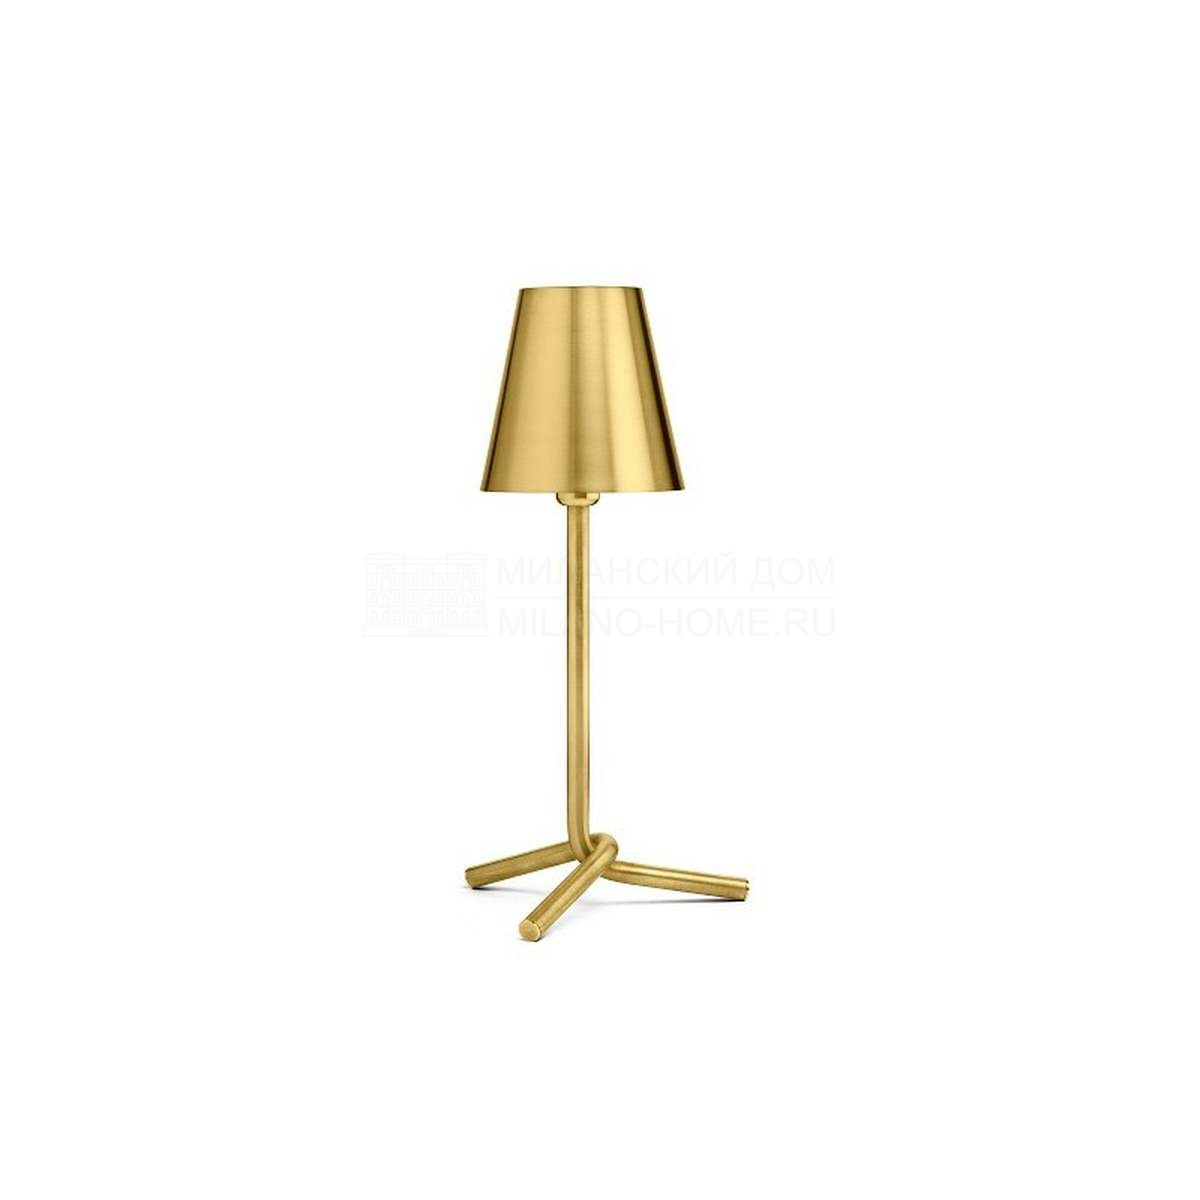 Настольная лампа Mio table lamp из Италии фабрики GHIDINI 1961